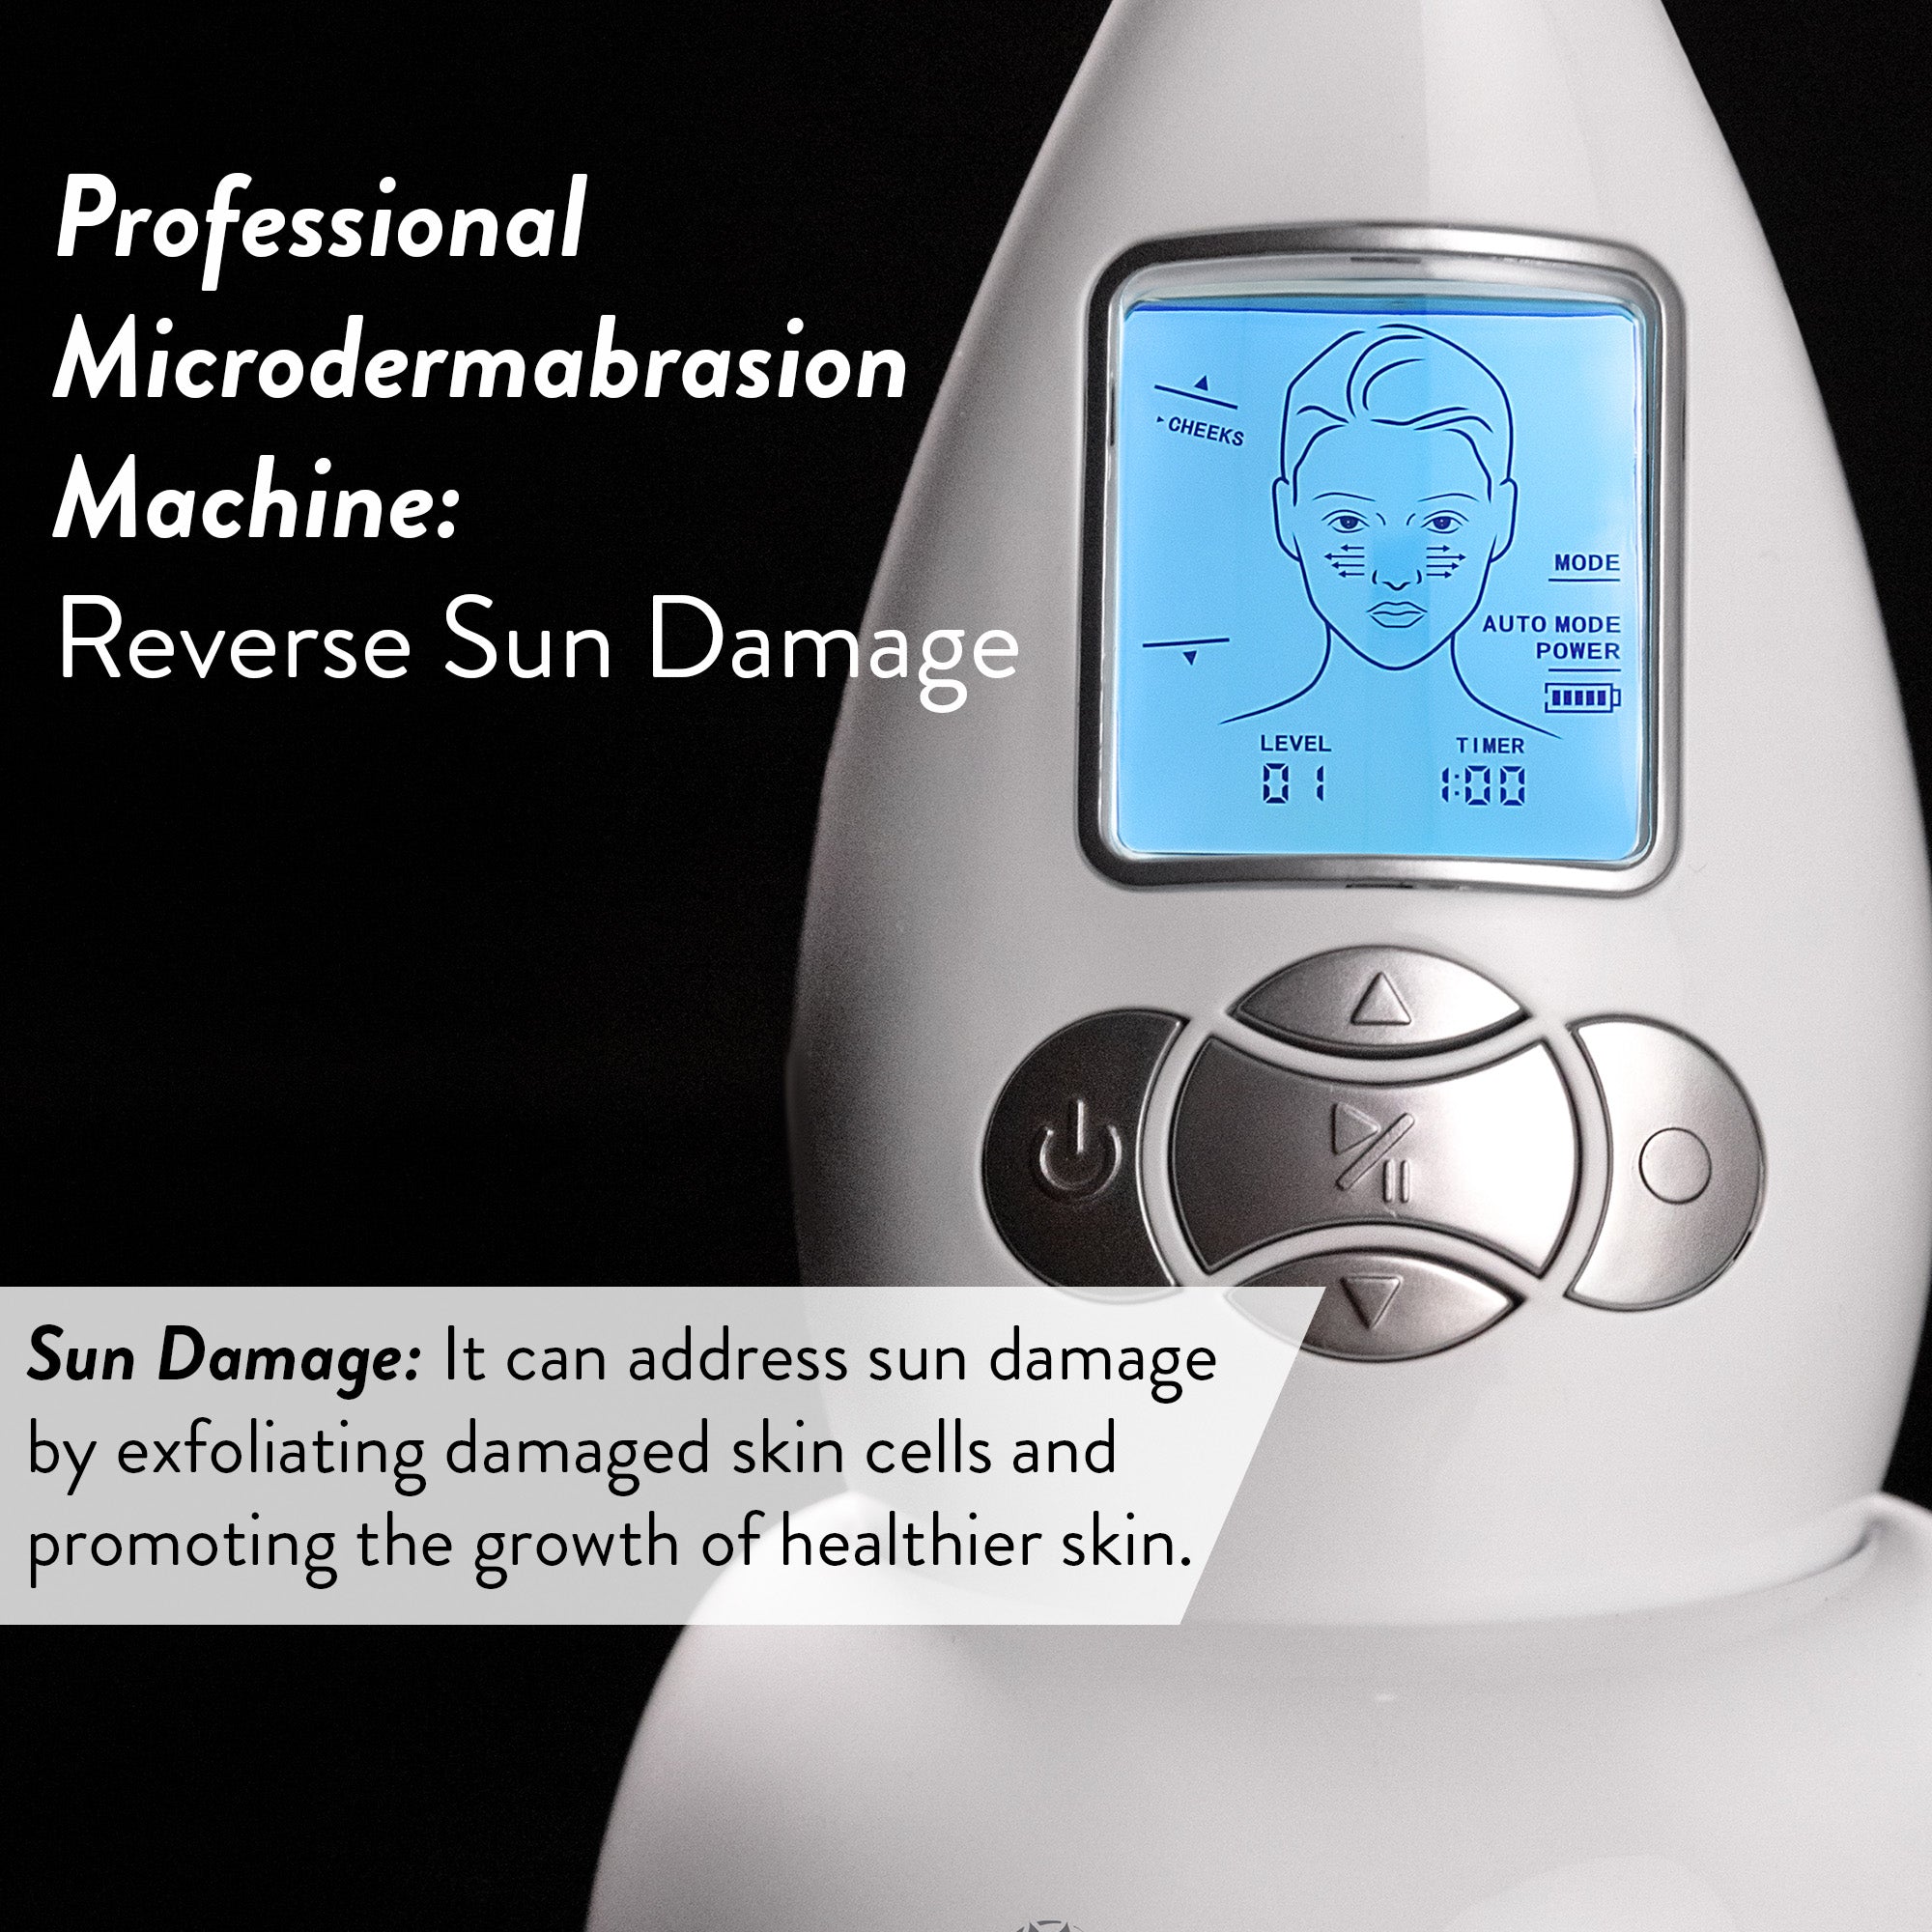 Microderm GLO Diamond Microdermabrasion Essentials Skincare Bundle